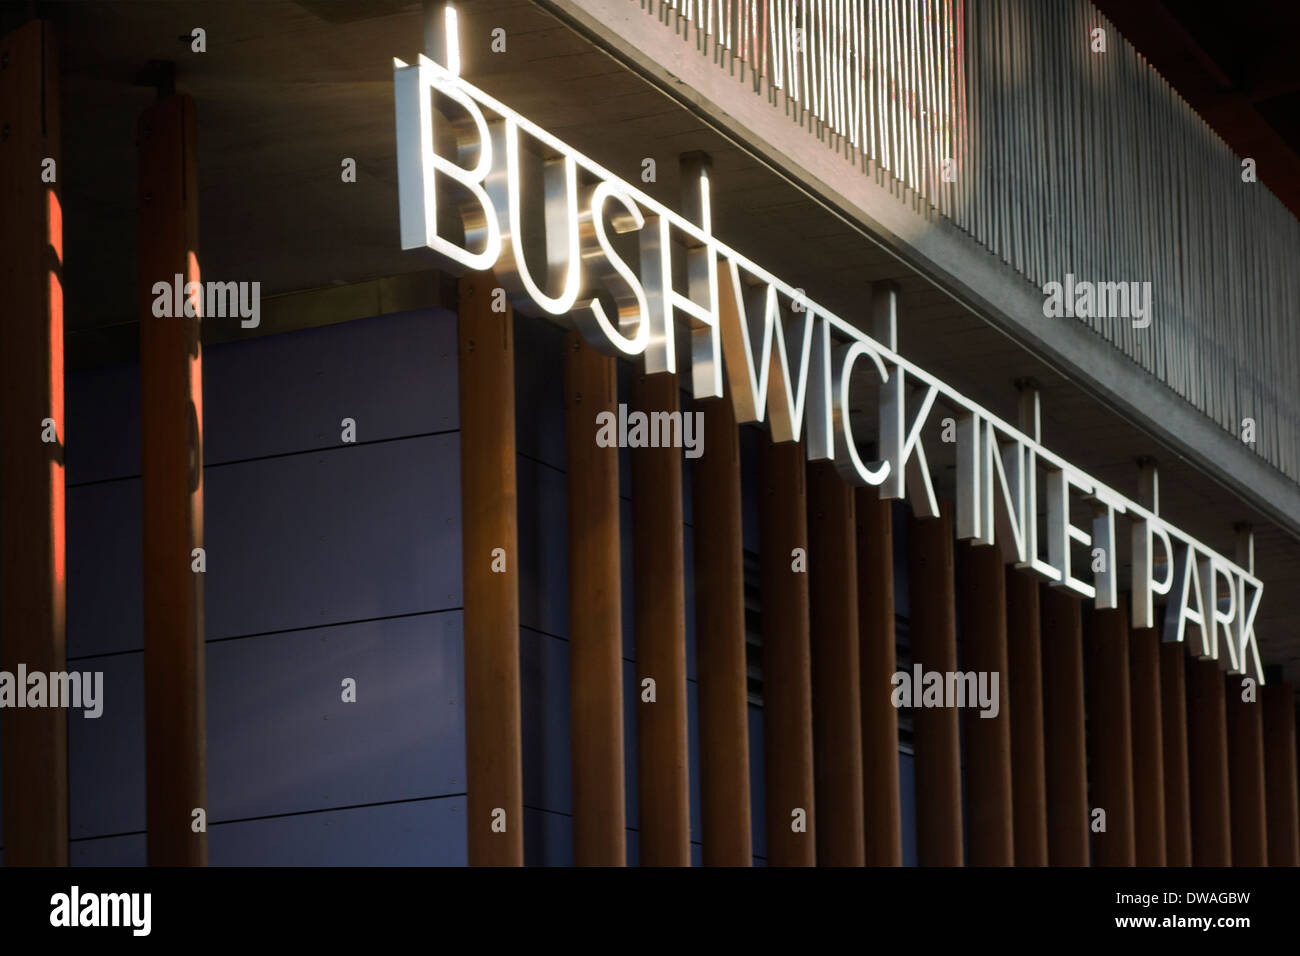 Bushwick Einlass Parkschild Stockfoto